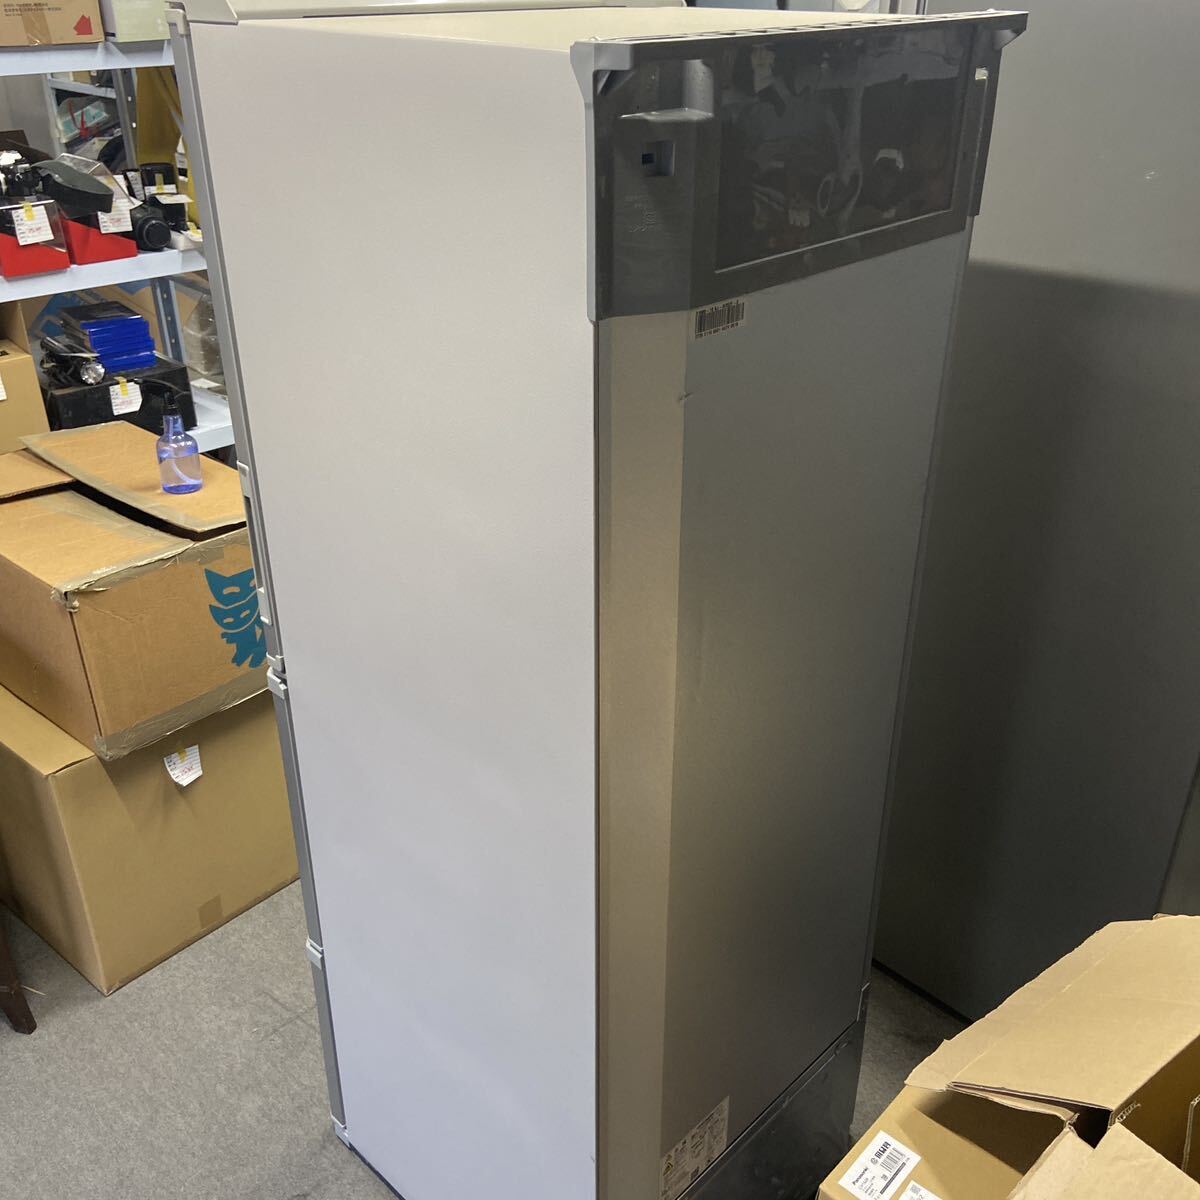 UTt553[ operation goods ]SHARP non freon freezing refrigerator 350L 2020 year made SJ-W352F-S sharp both opening 